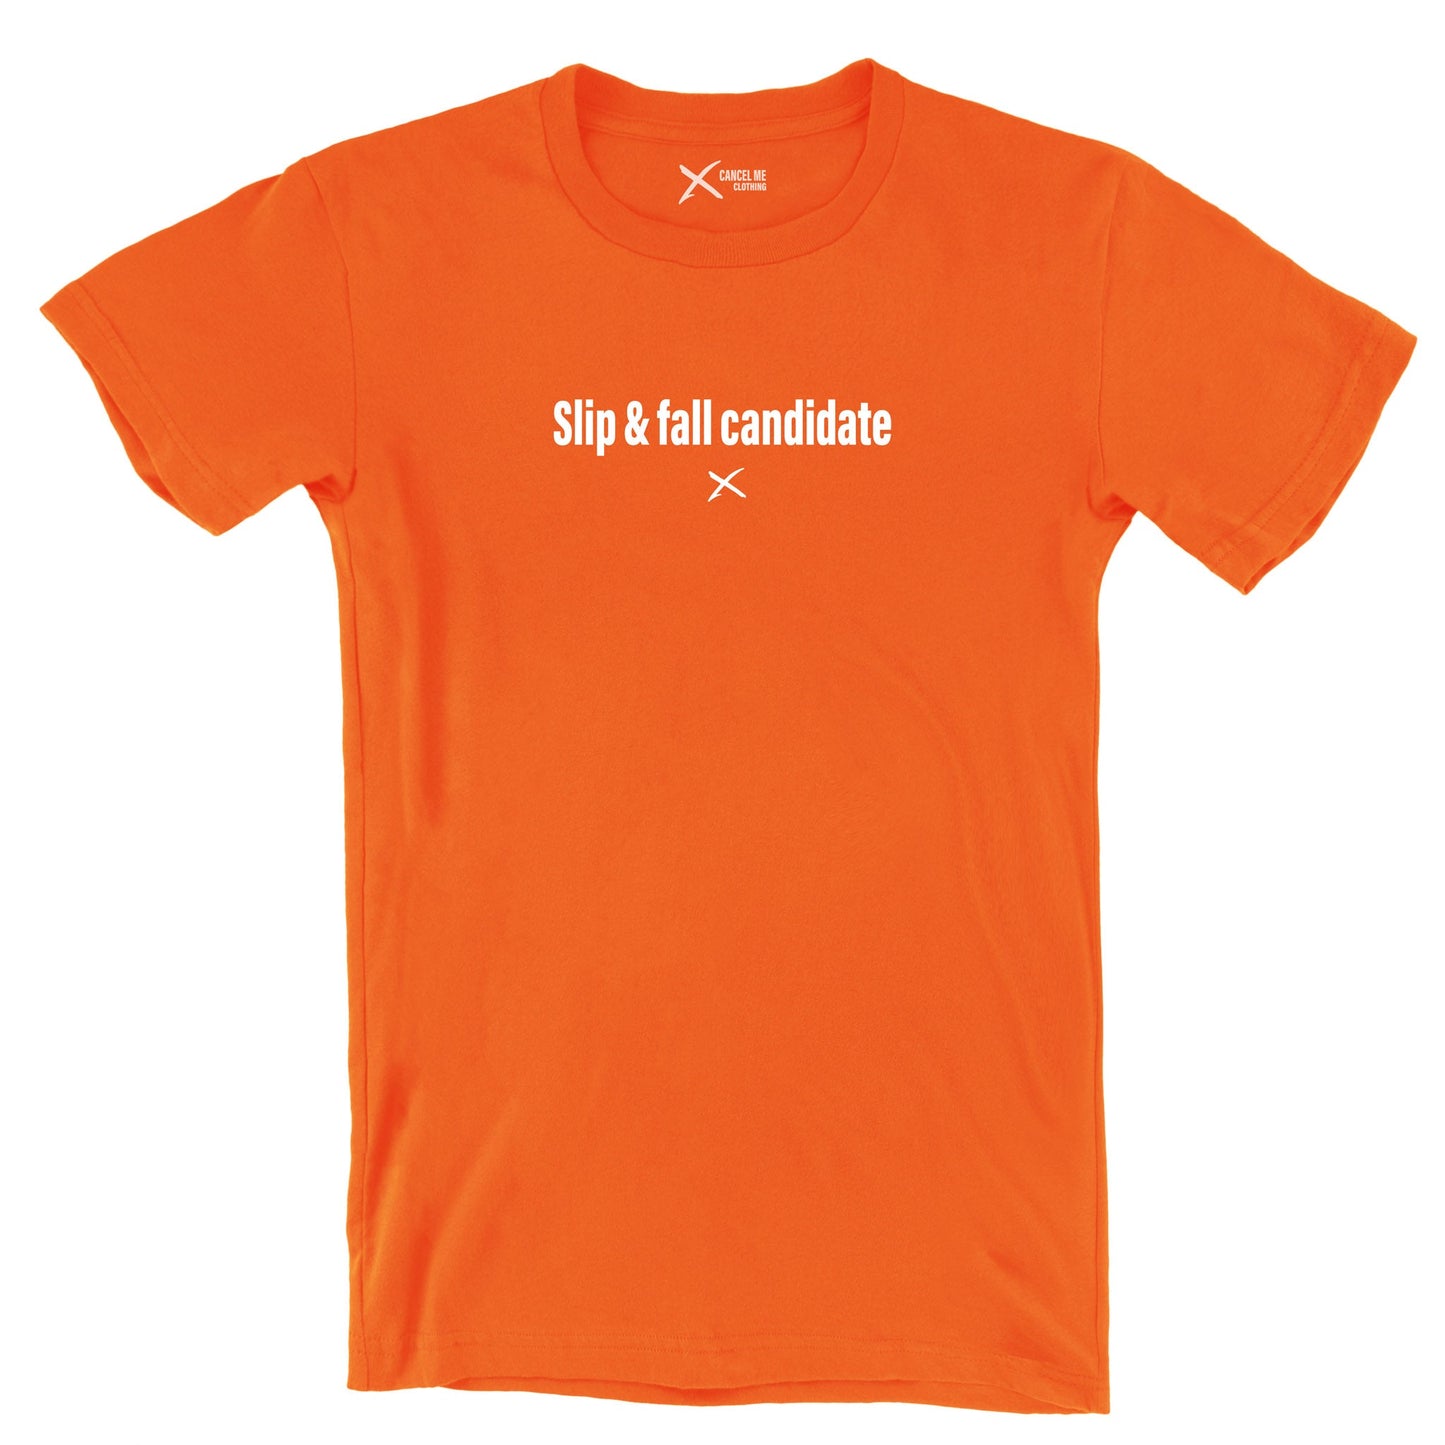 Slip & fall candidate - Shirt